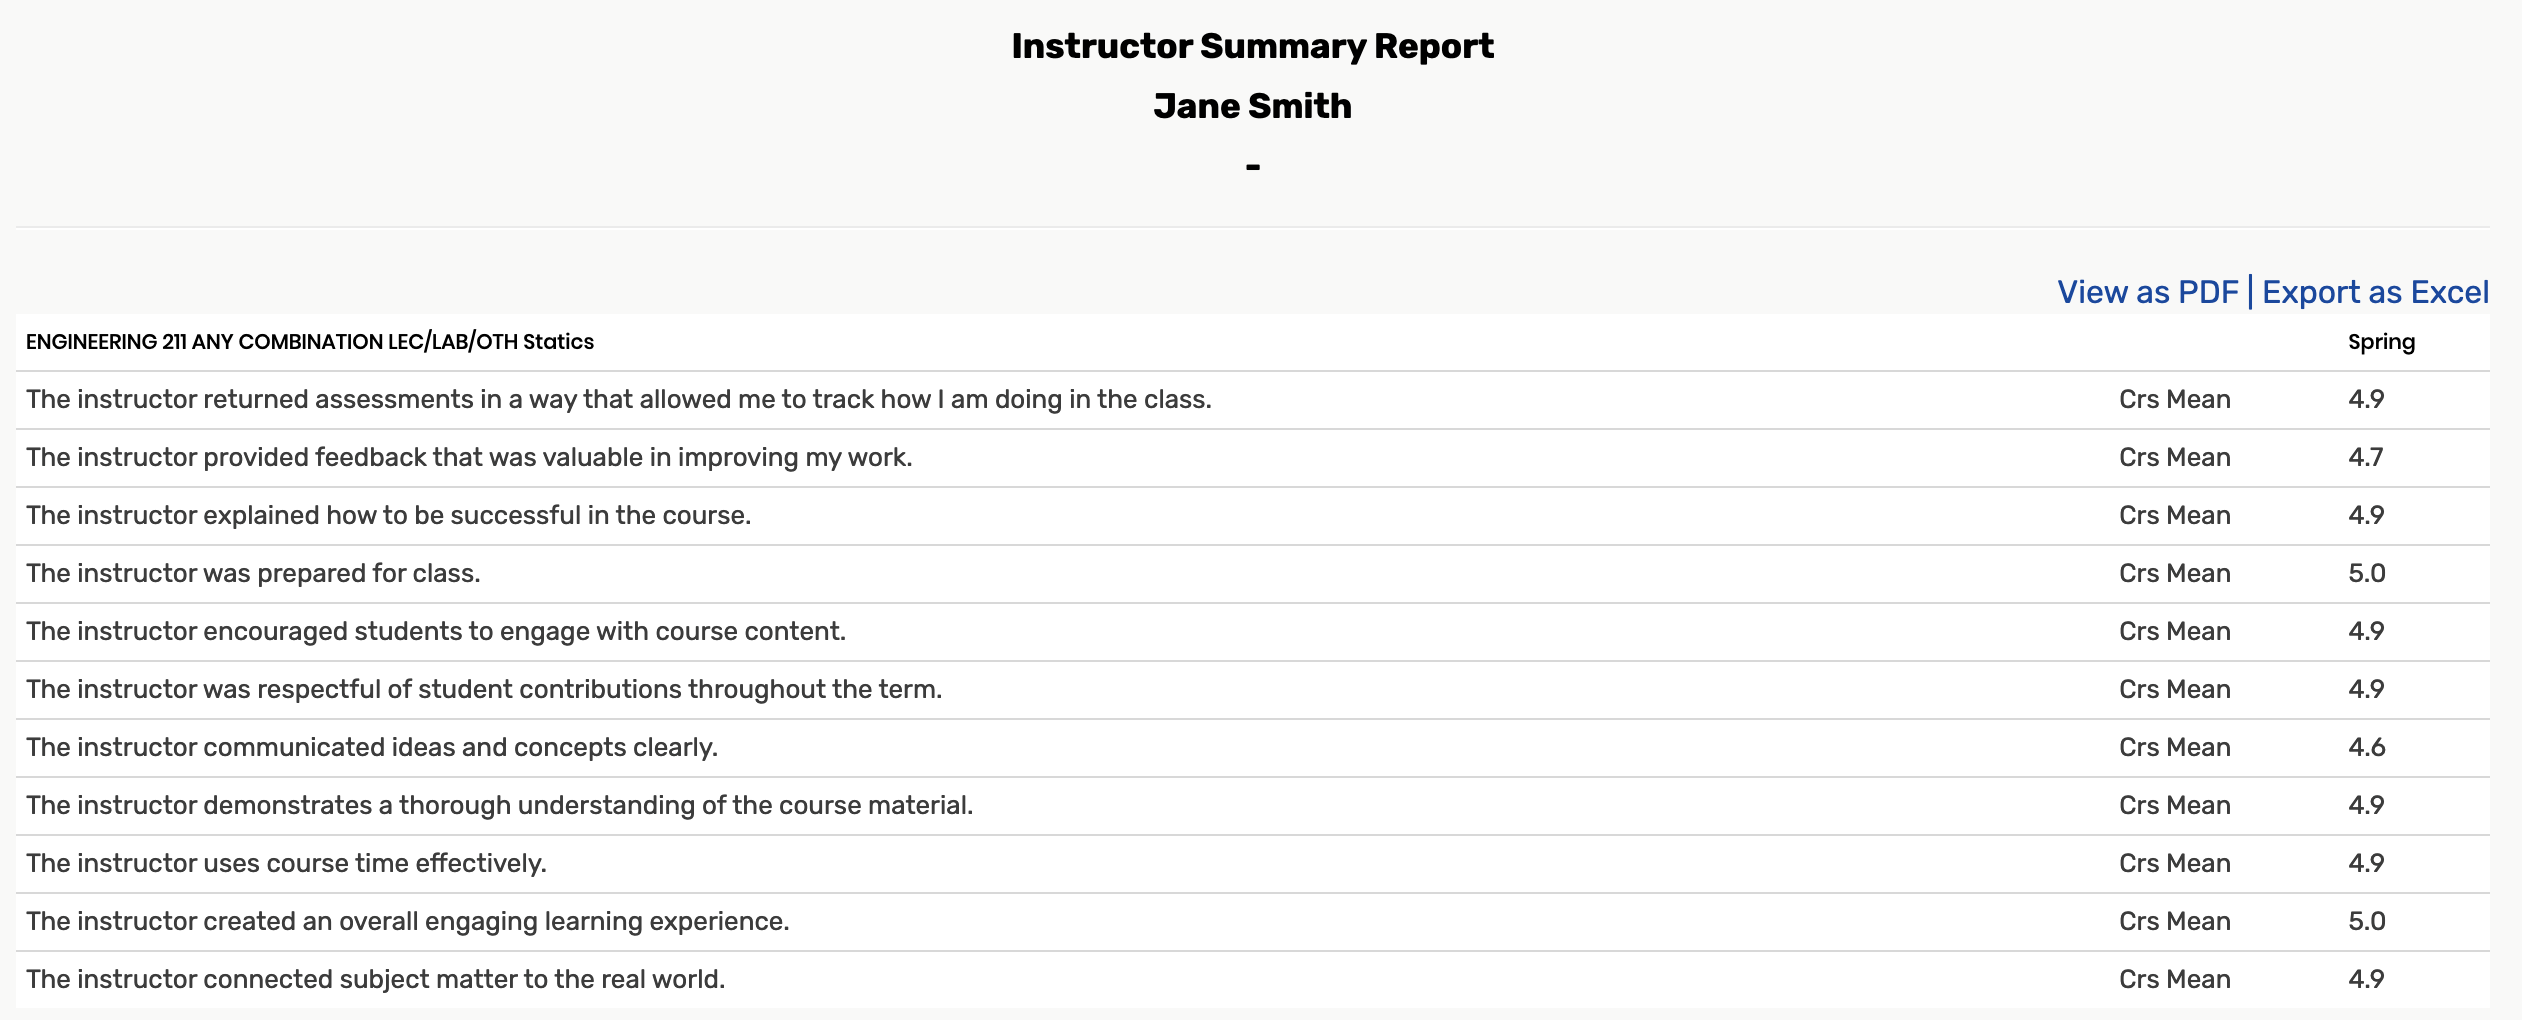 Instructor summary example output